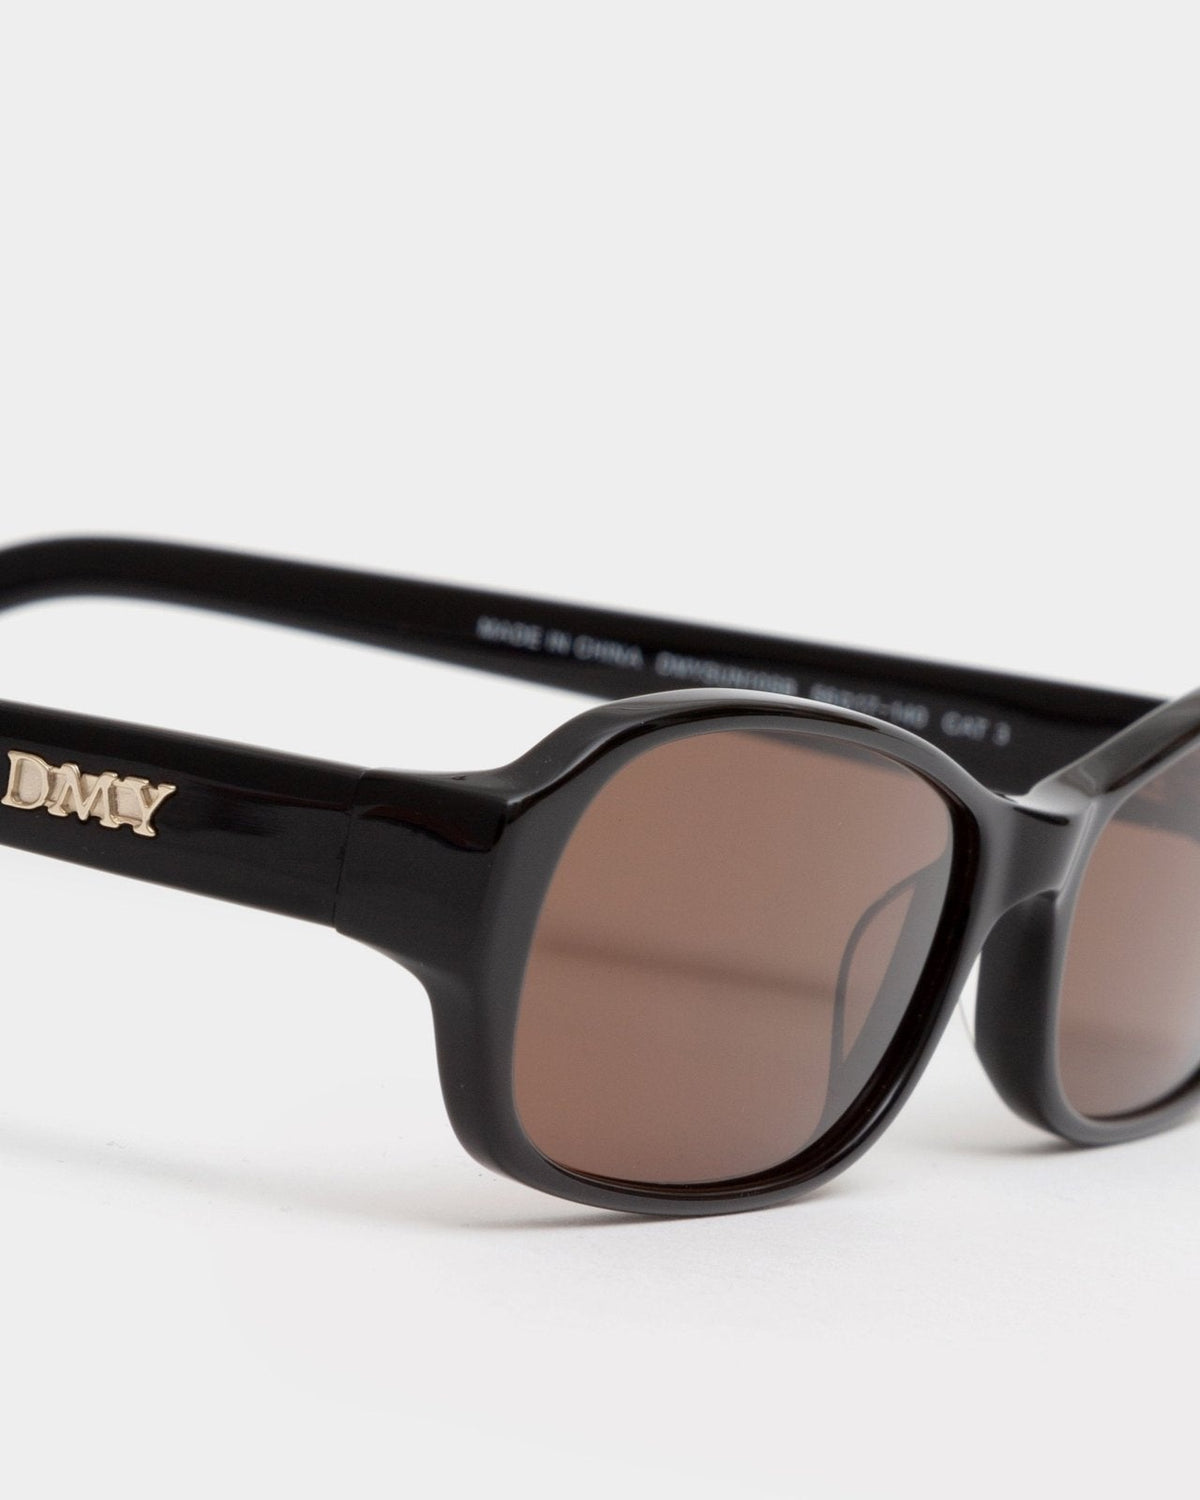 DMY Studios Juno Sunglasses